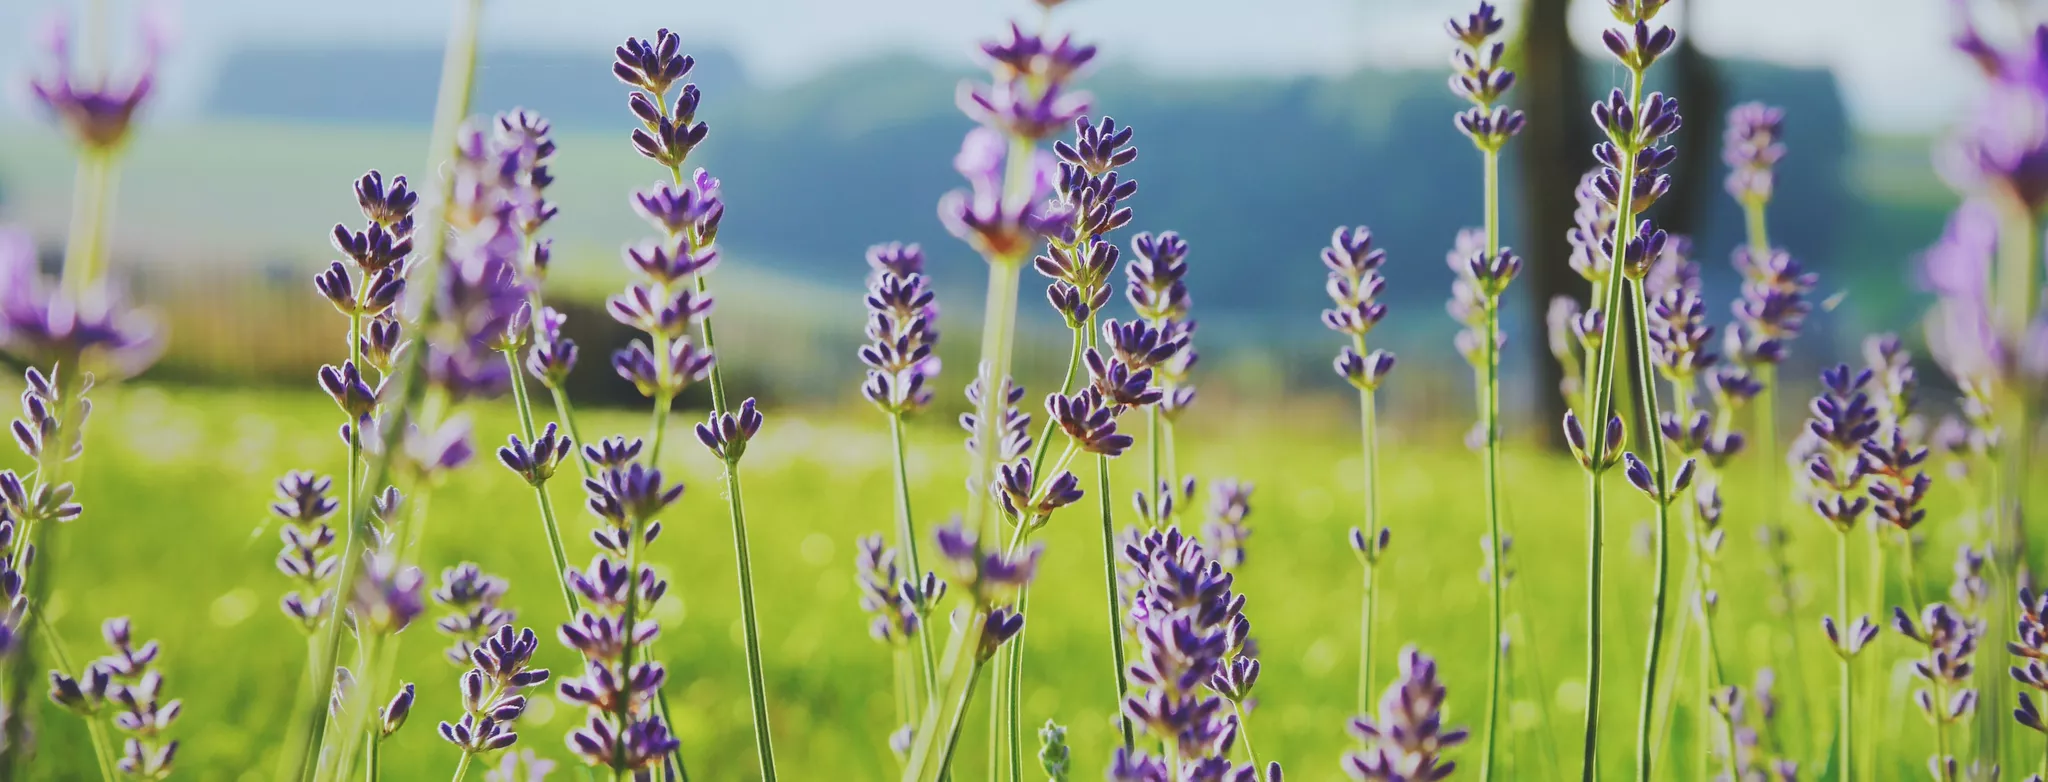 Lavender in a field 